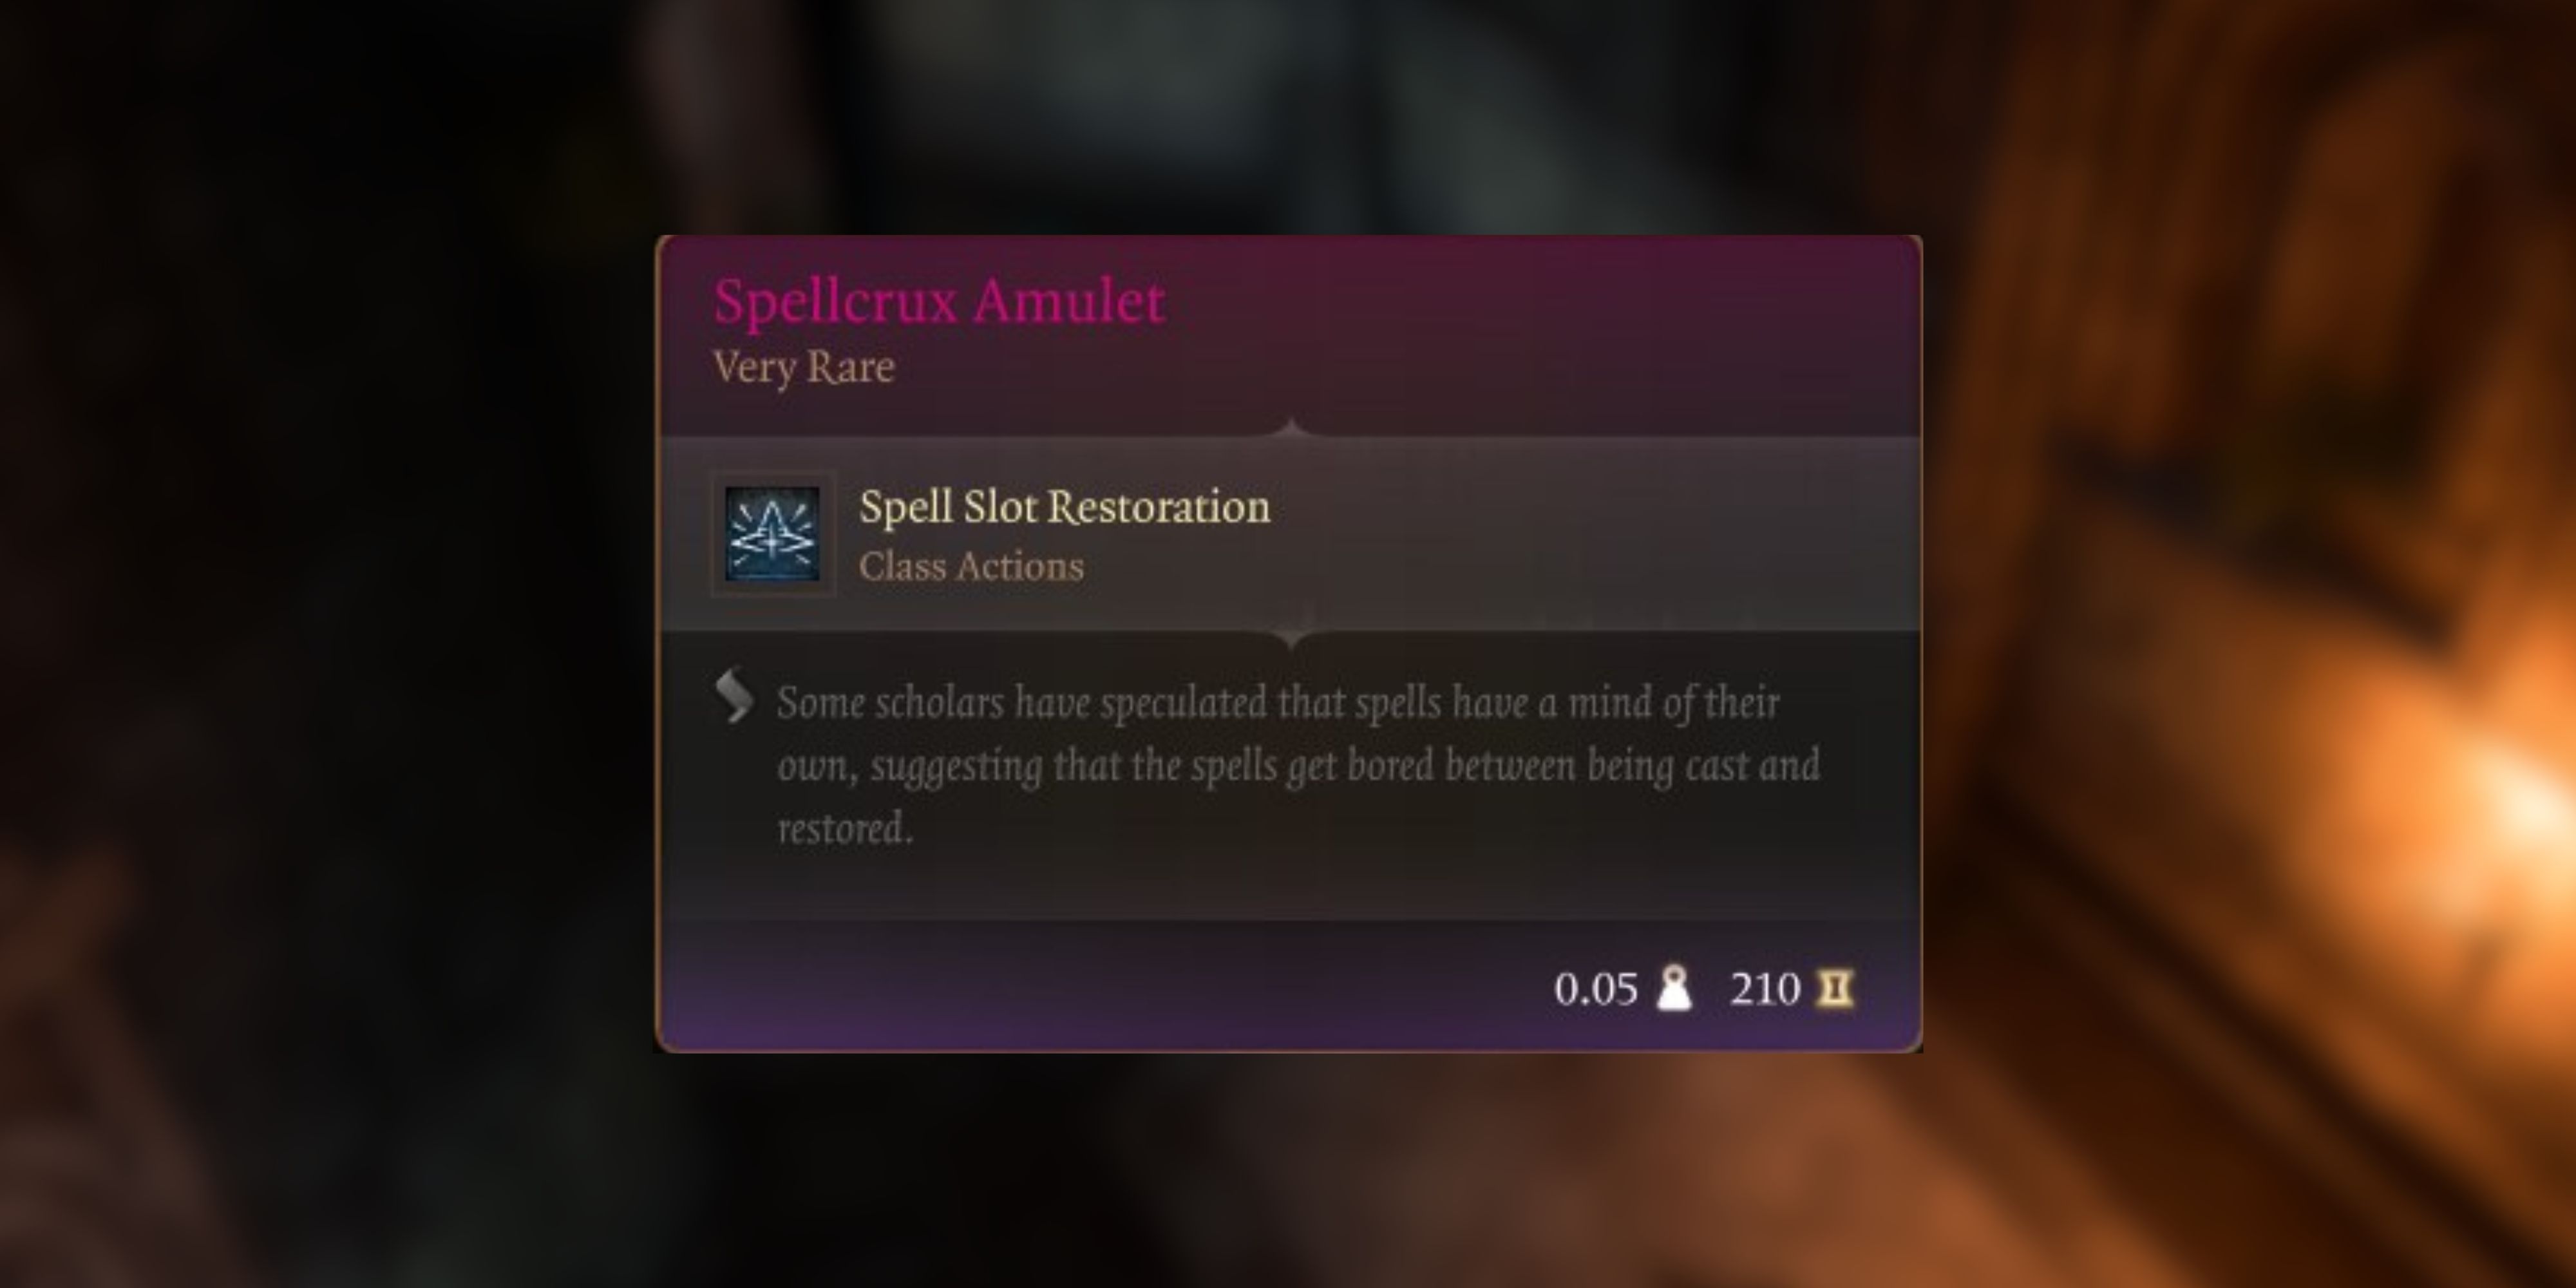 spellcrux amulet in baldur's gate 3